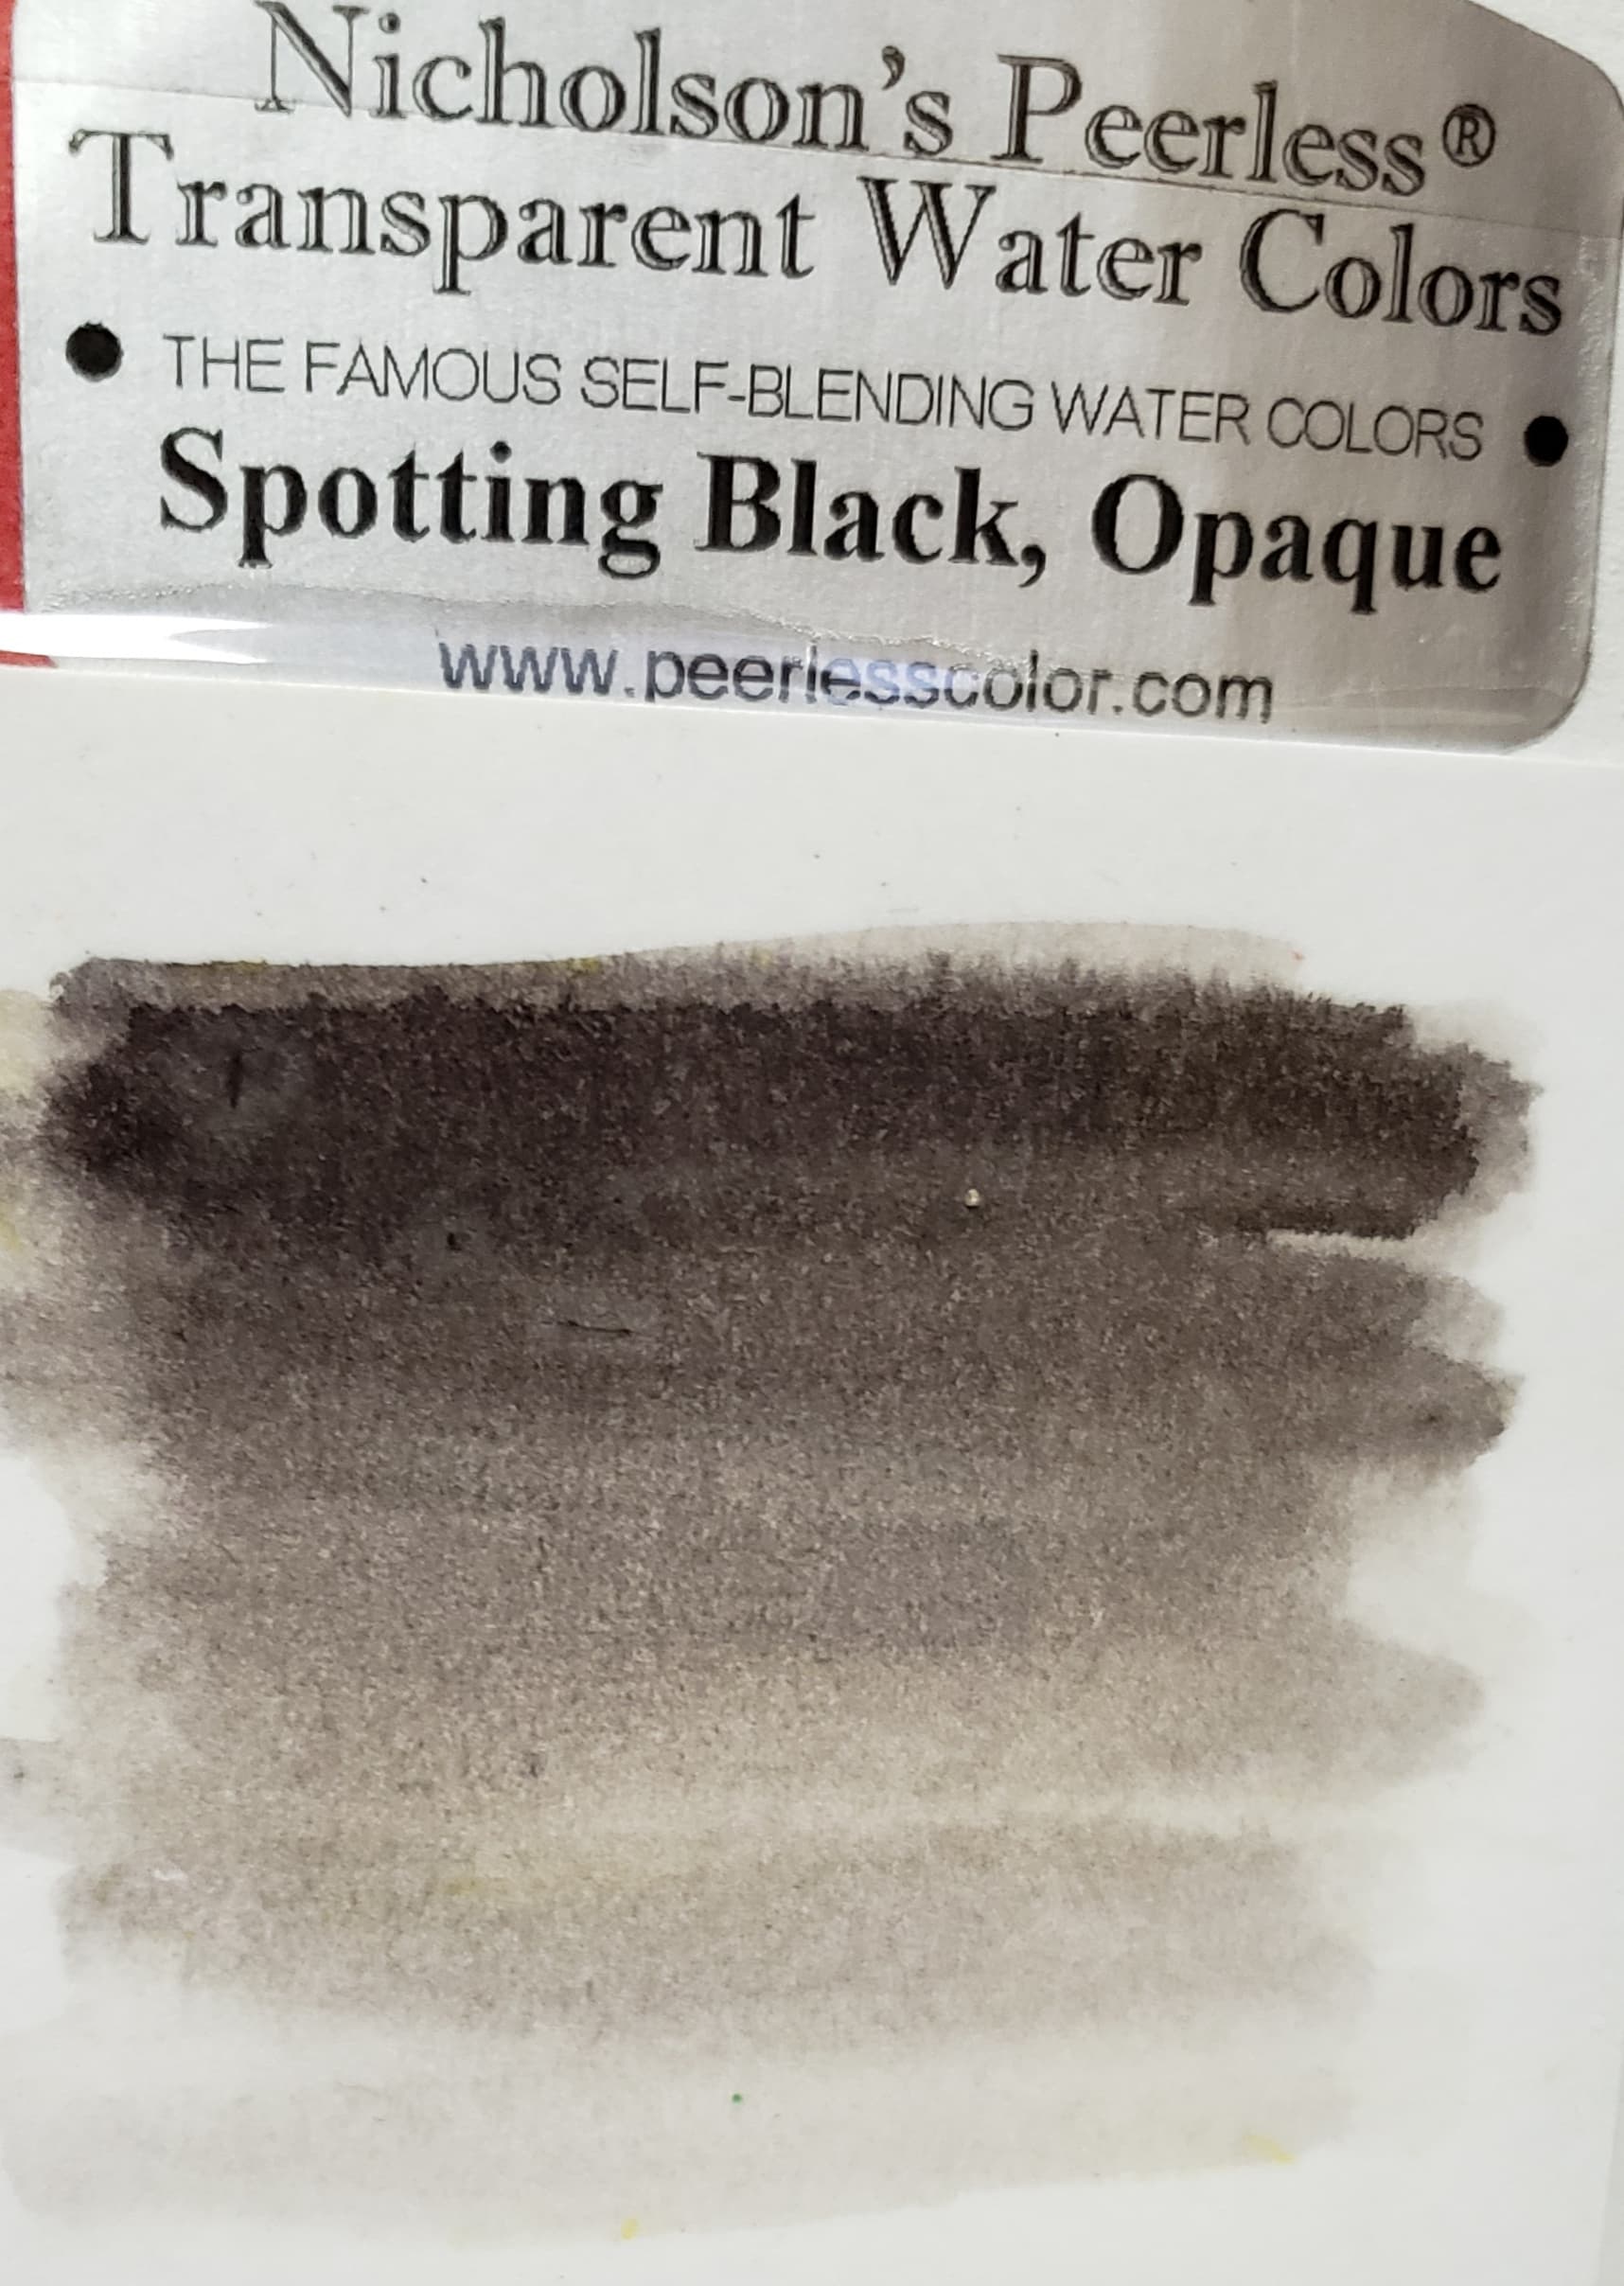 Spotting Black Opaque